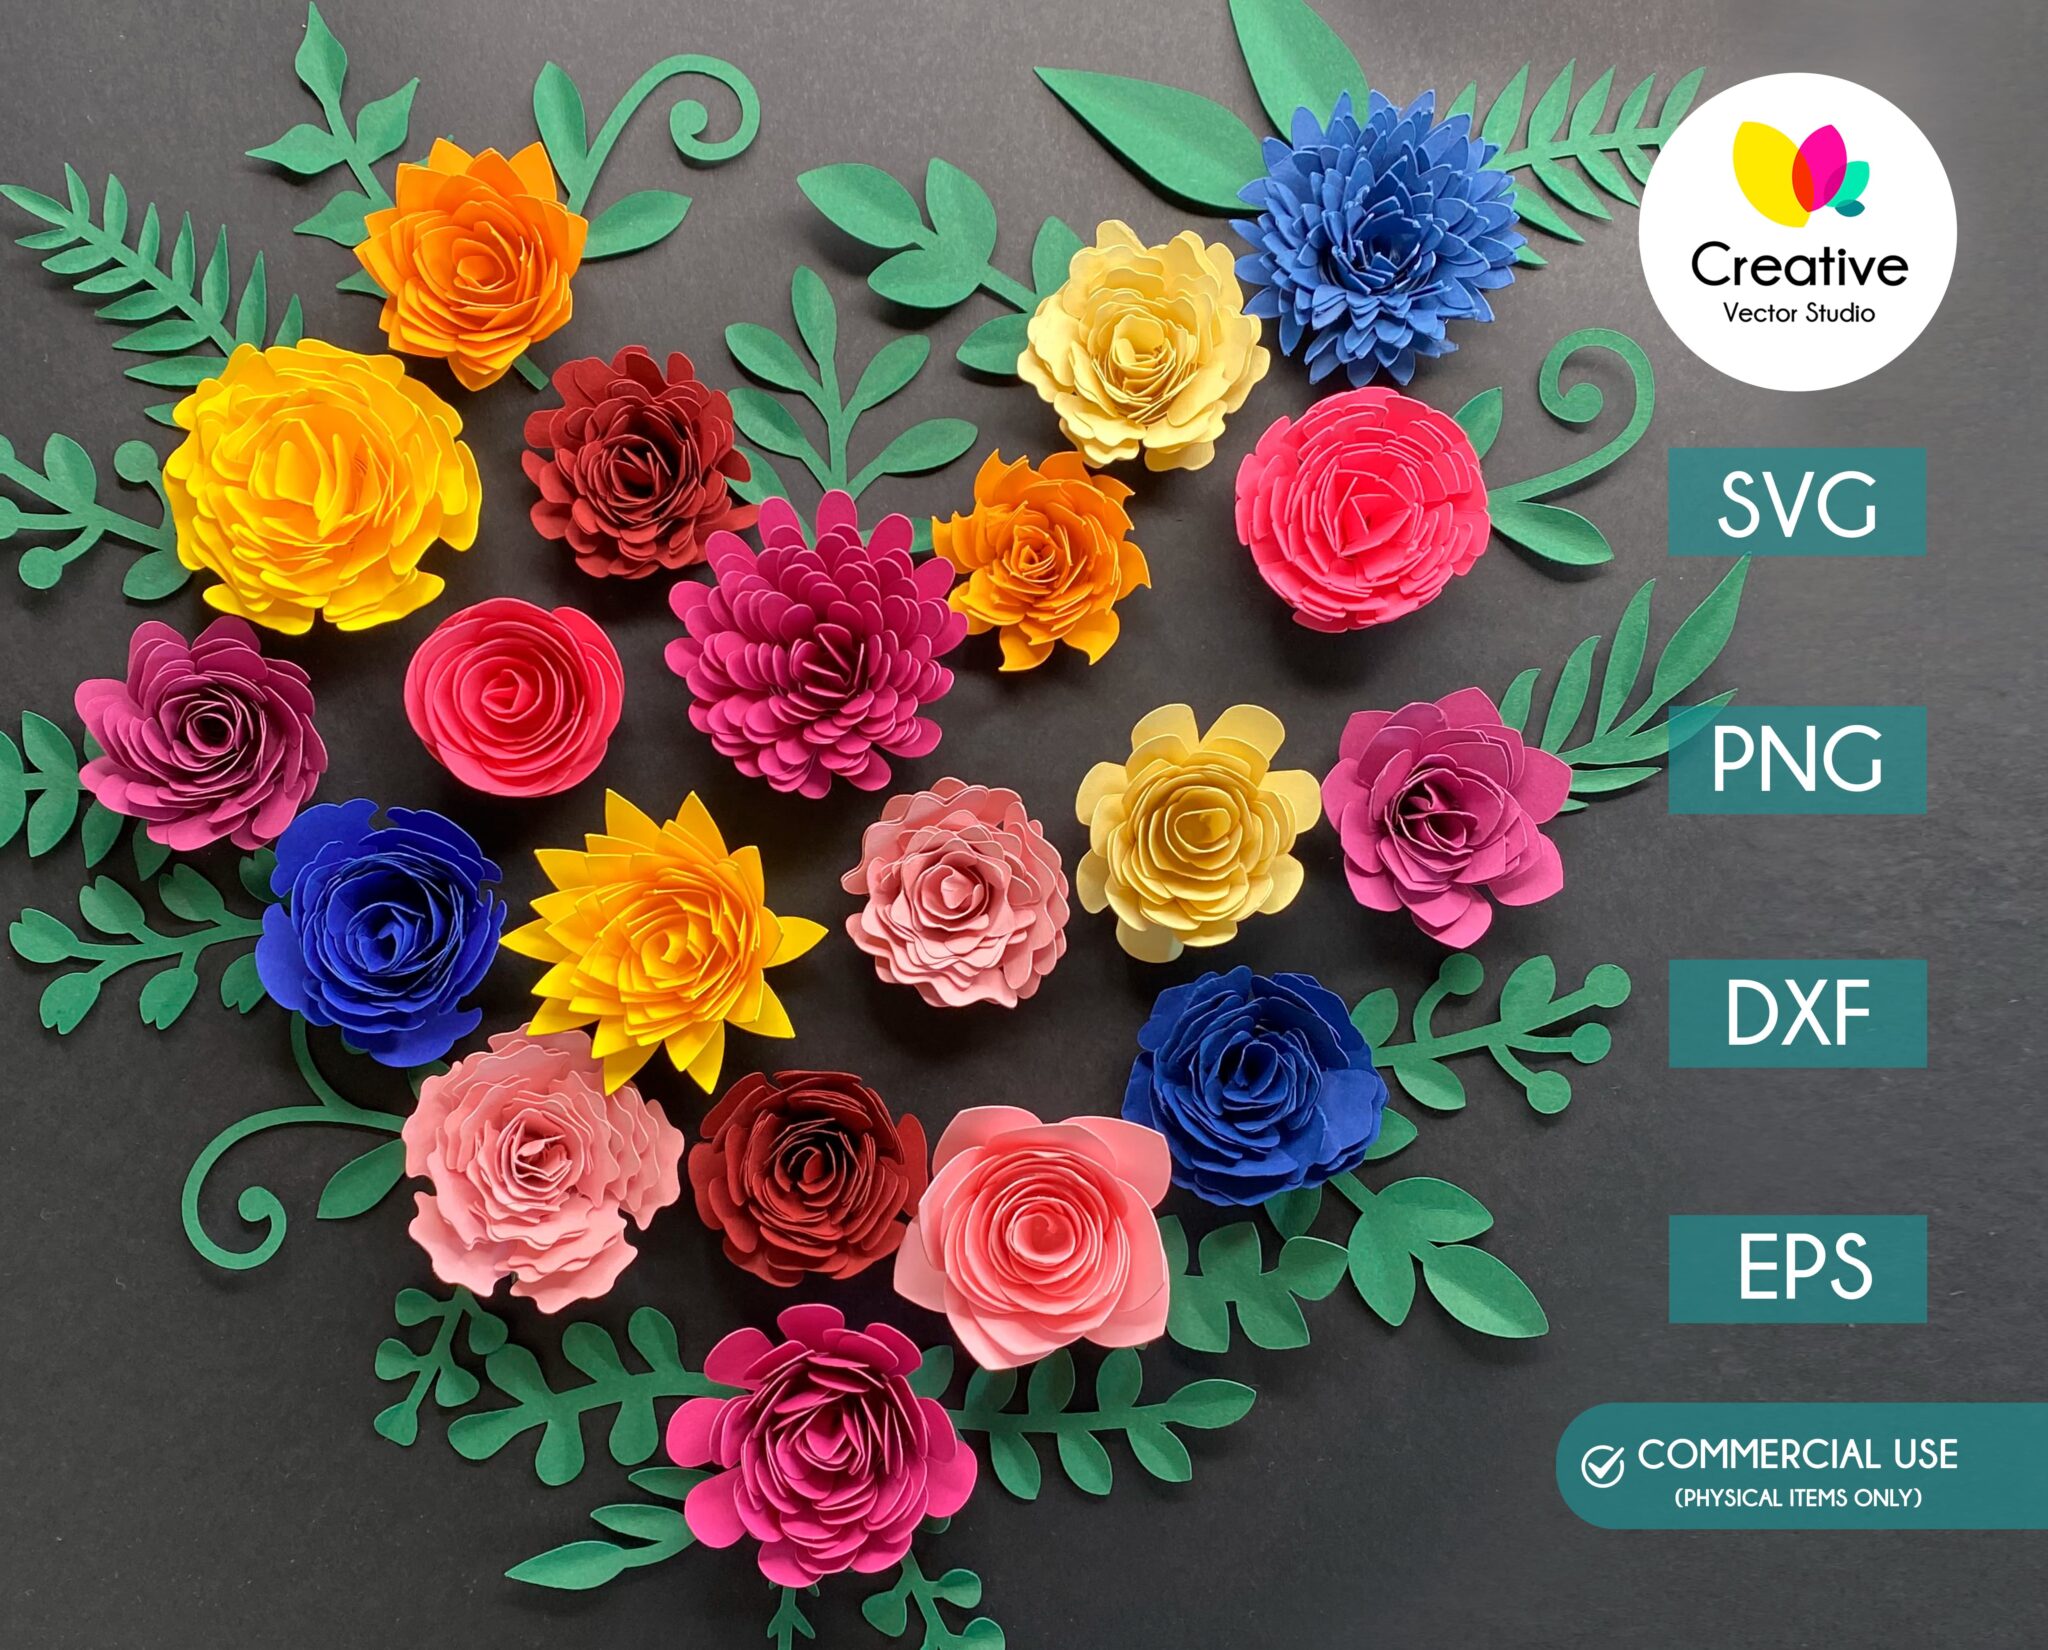 Rolled Flower and Leaves SVG Bundle | Creative Vector Studio